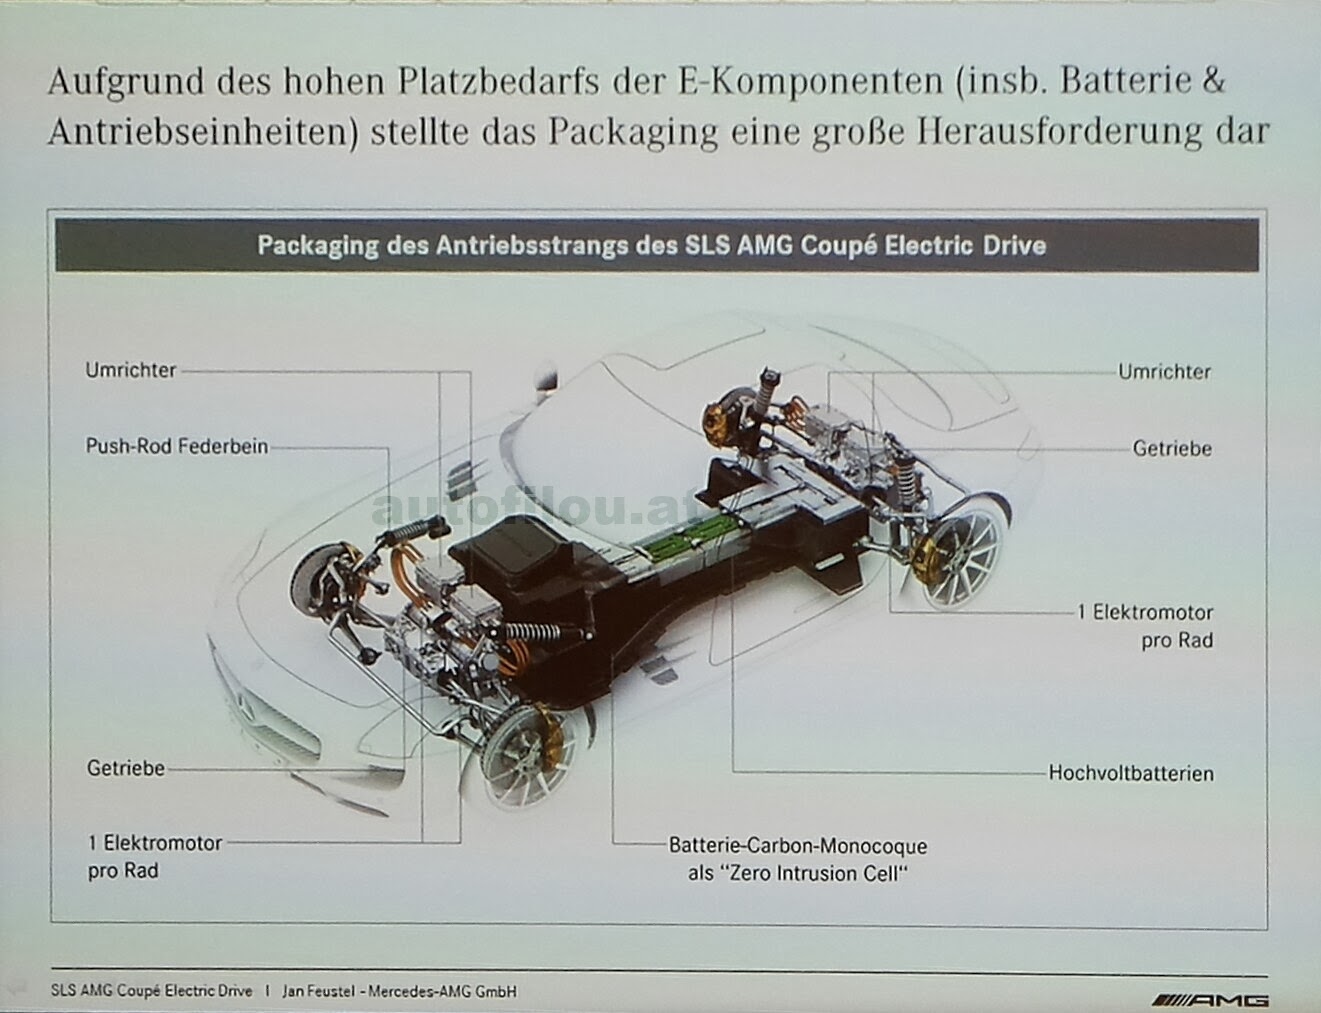 Der Supersportwagen SLS AMG Electric Drive | Vortrag Jan Feustel | Copyright: Raphael Gürth/autofilou.at